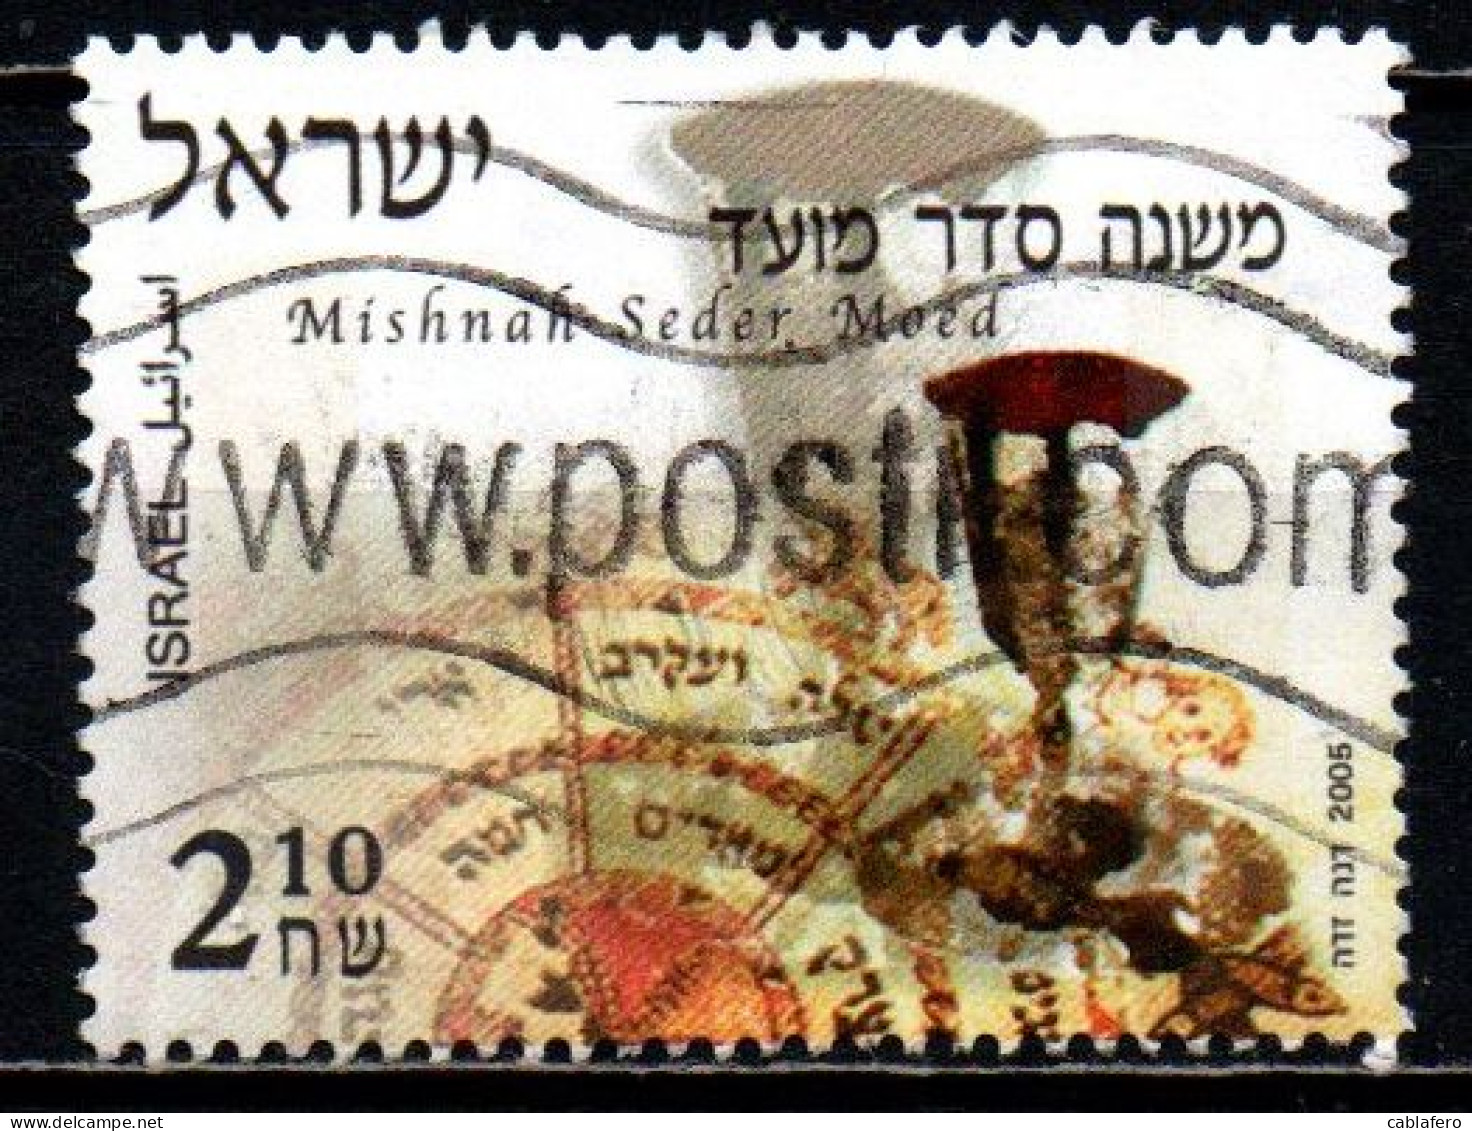 ISRAELE - 2005 - Orders Of The Mishnah - Moed - USATO - Usati (senza Tab)